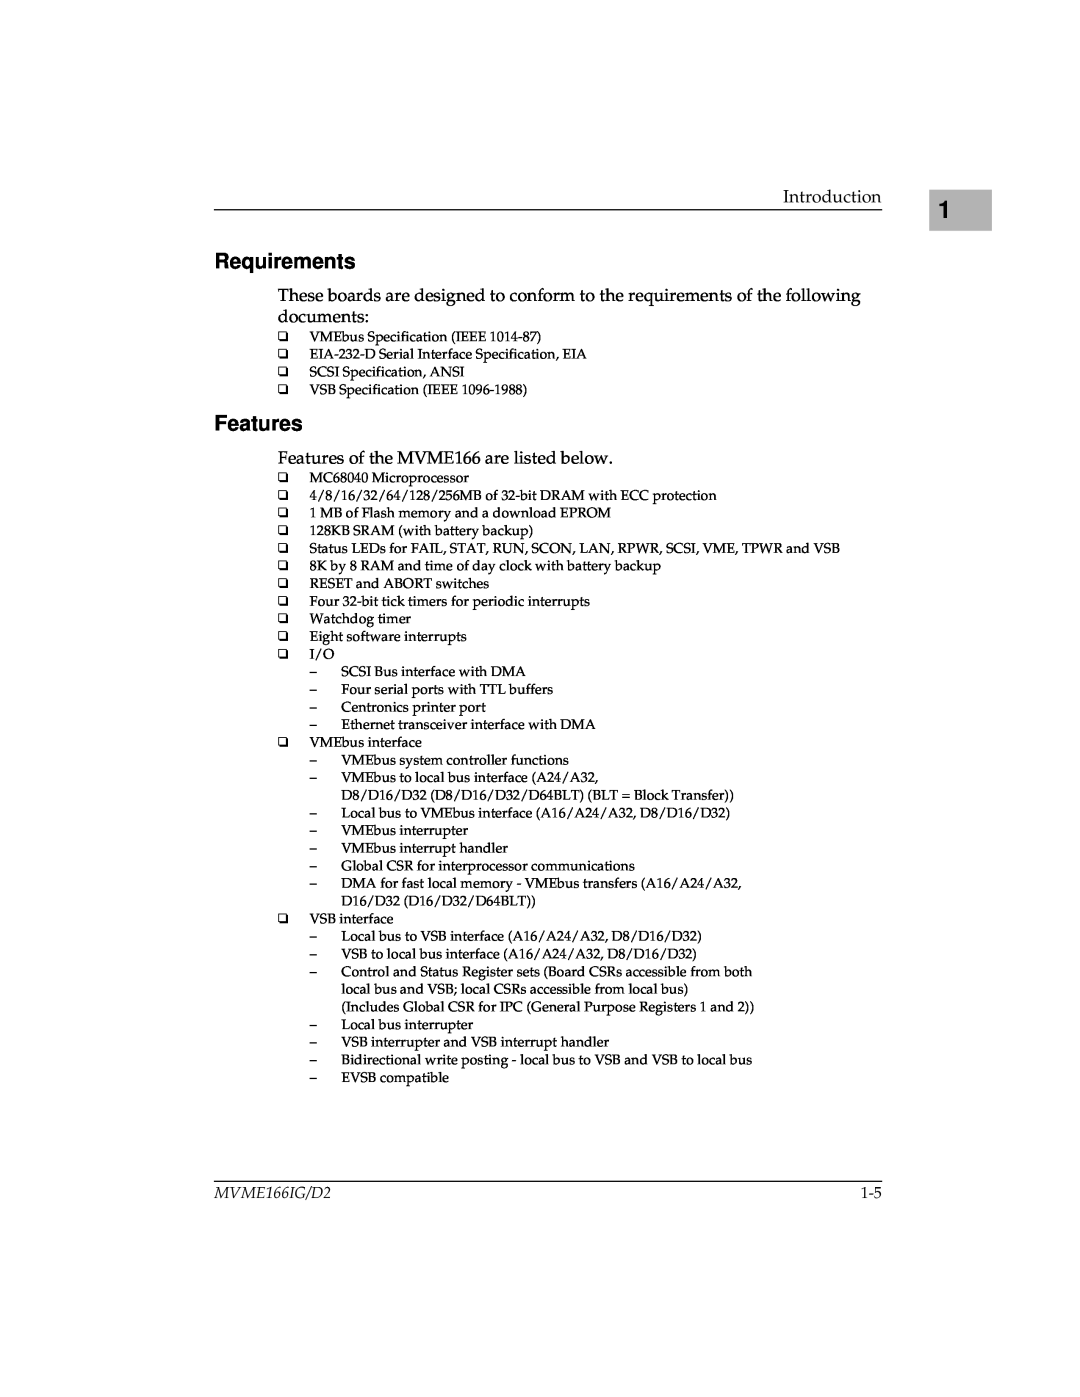 Motorola MVME166D2 manual Requirements, Features, MVME166IG/D2 